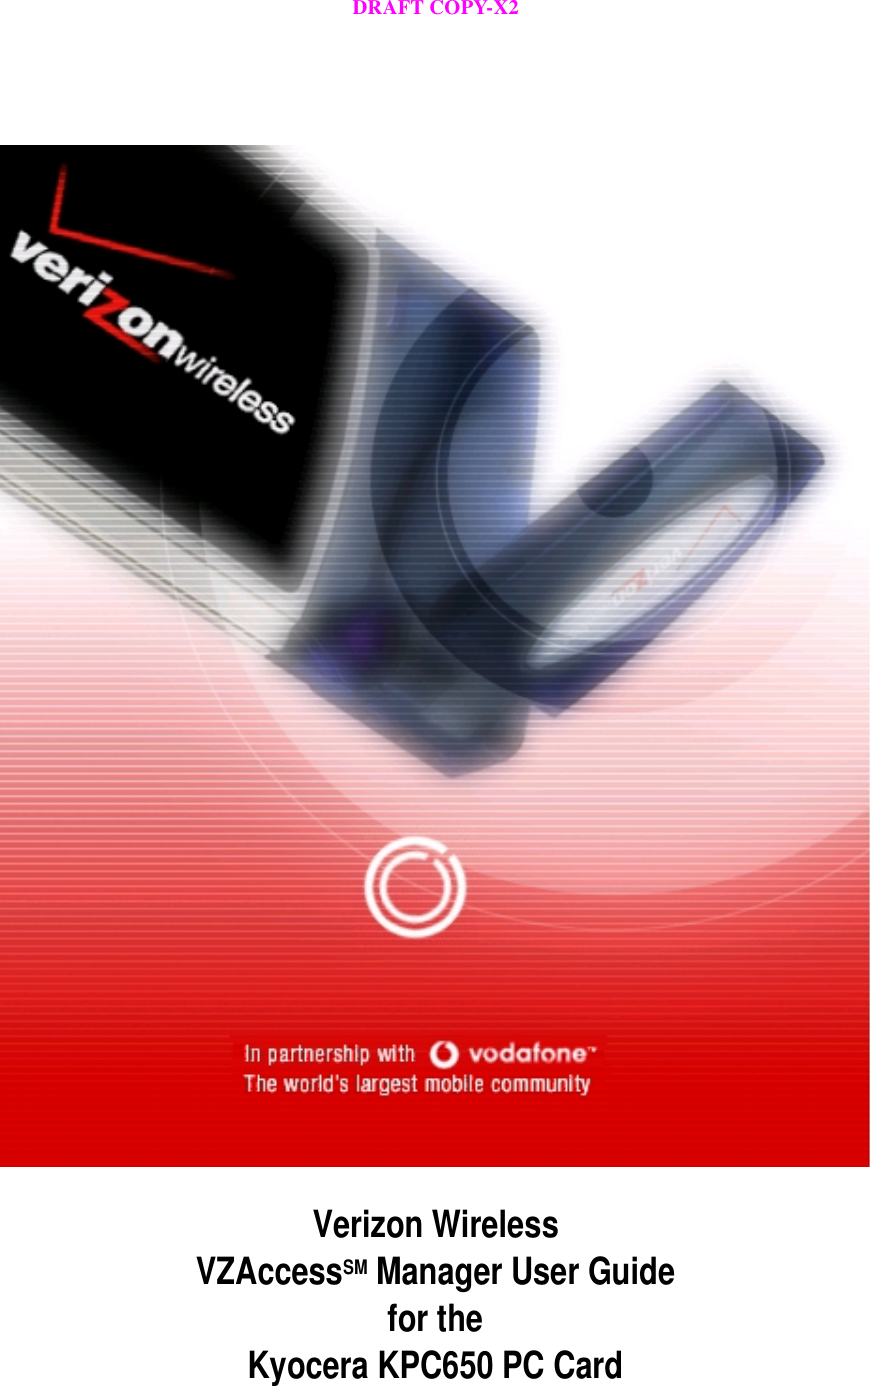 DRAFT COPY-X2Verizon Wireless VZAccessSM Manager User Guidefor the Kyocera KPC650 PC Card